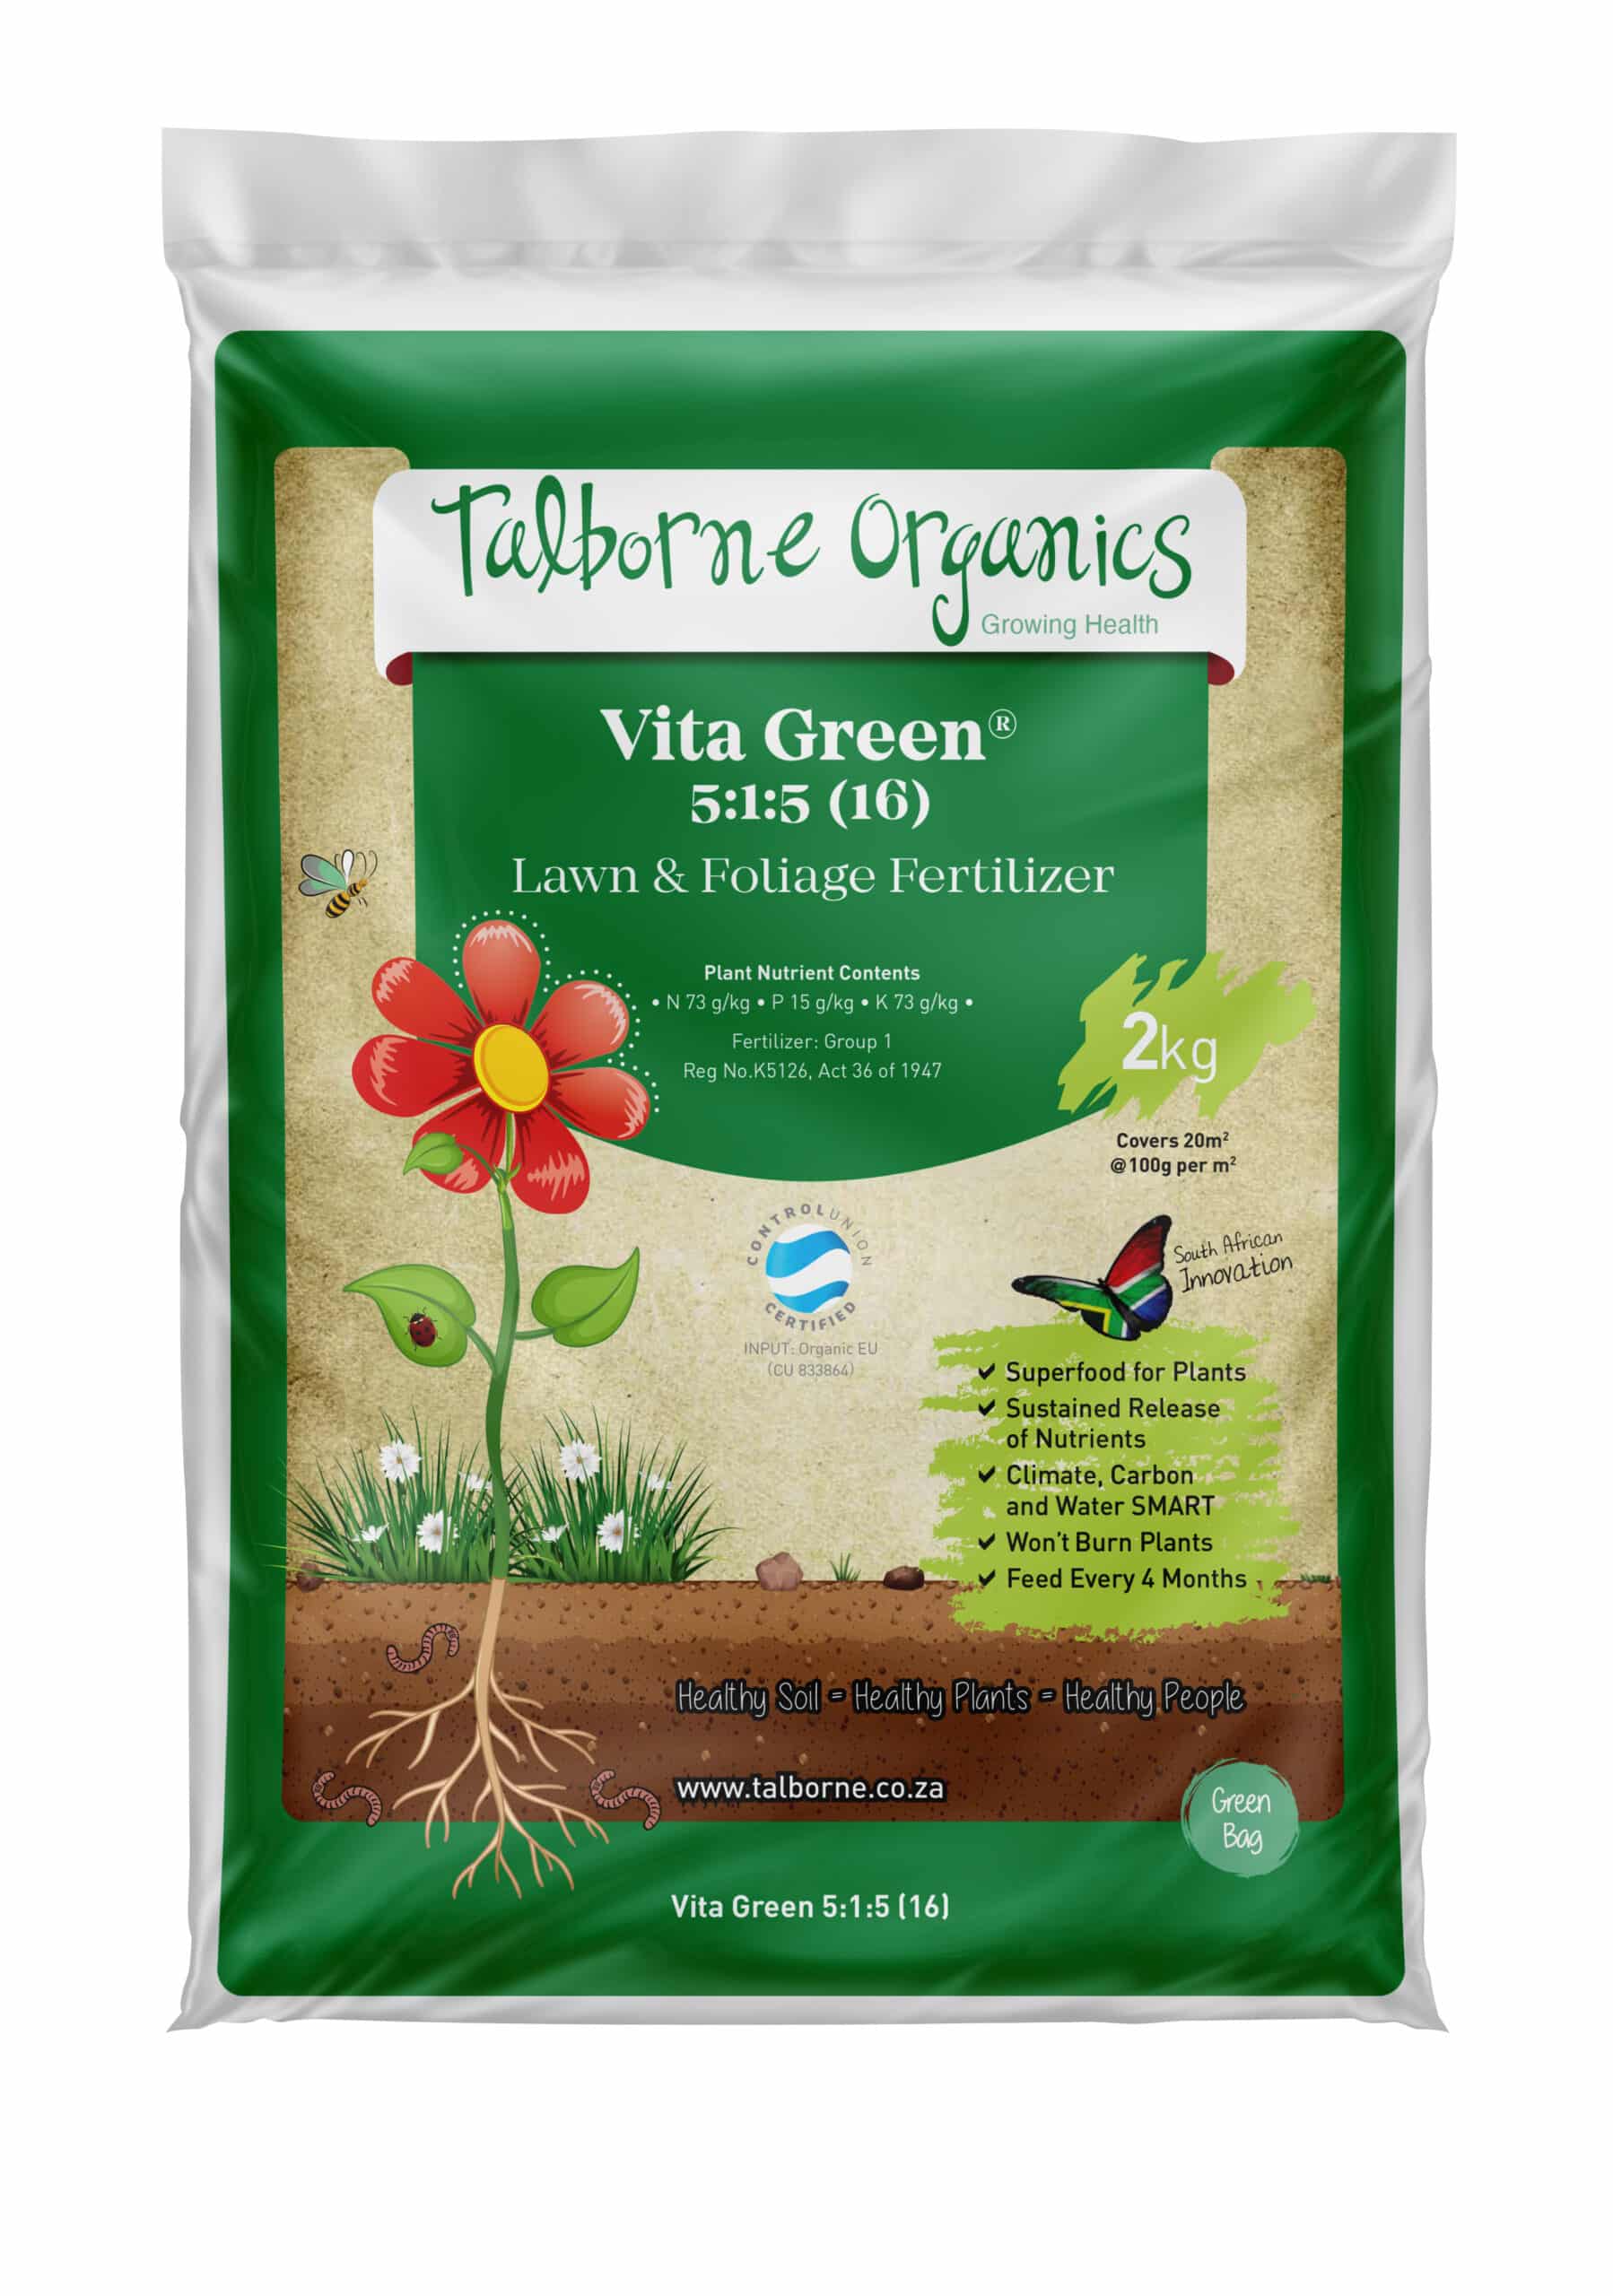 Green 2kg bag of Talborne Organics Vita Green 5:1:5 (16) Lawn & Foliage Fertiliser with image of flowering plant and lawn.